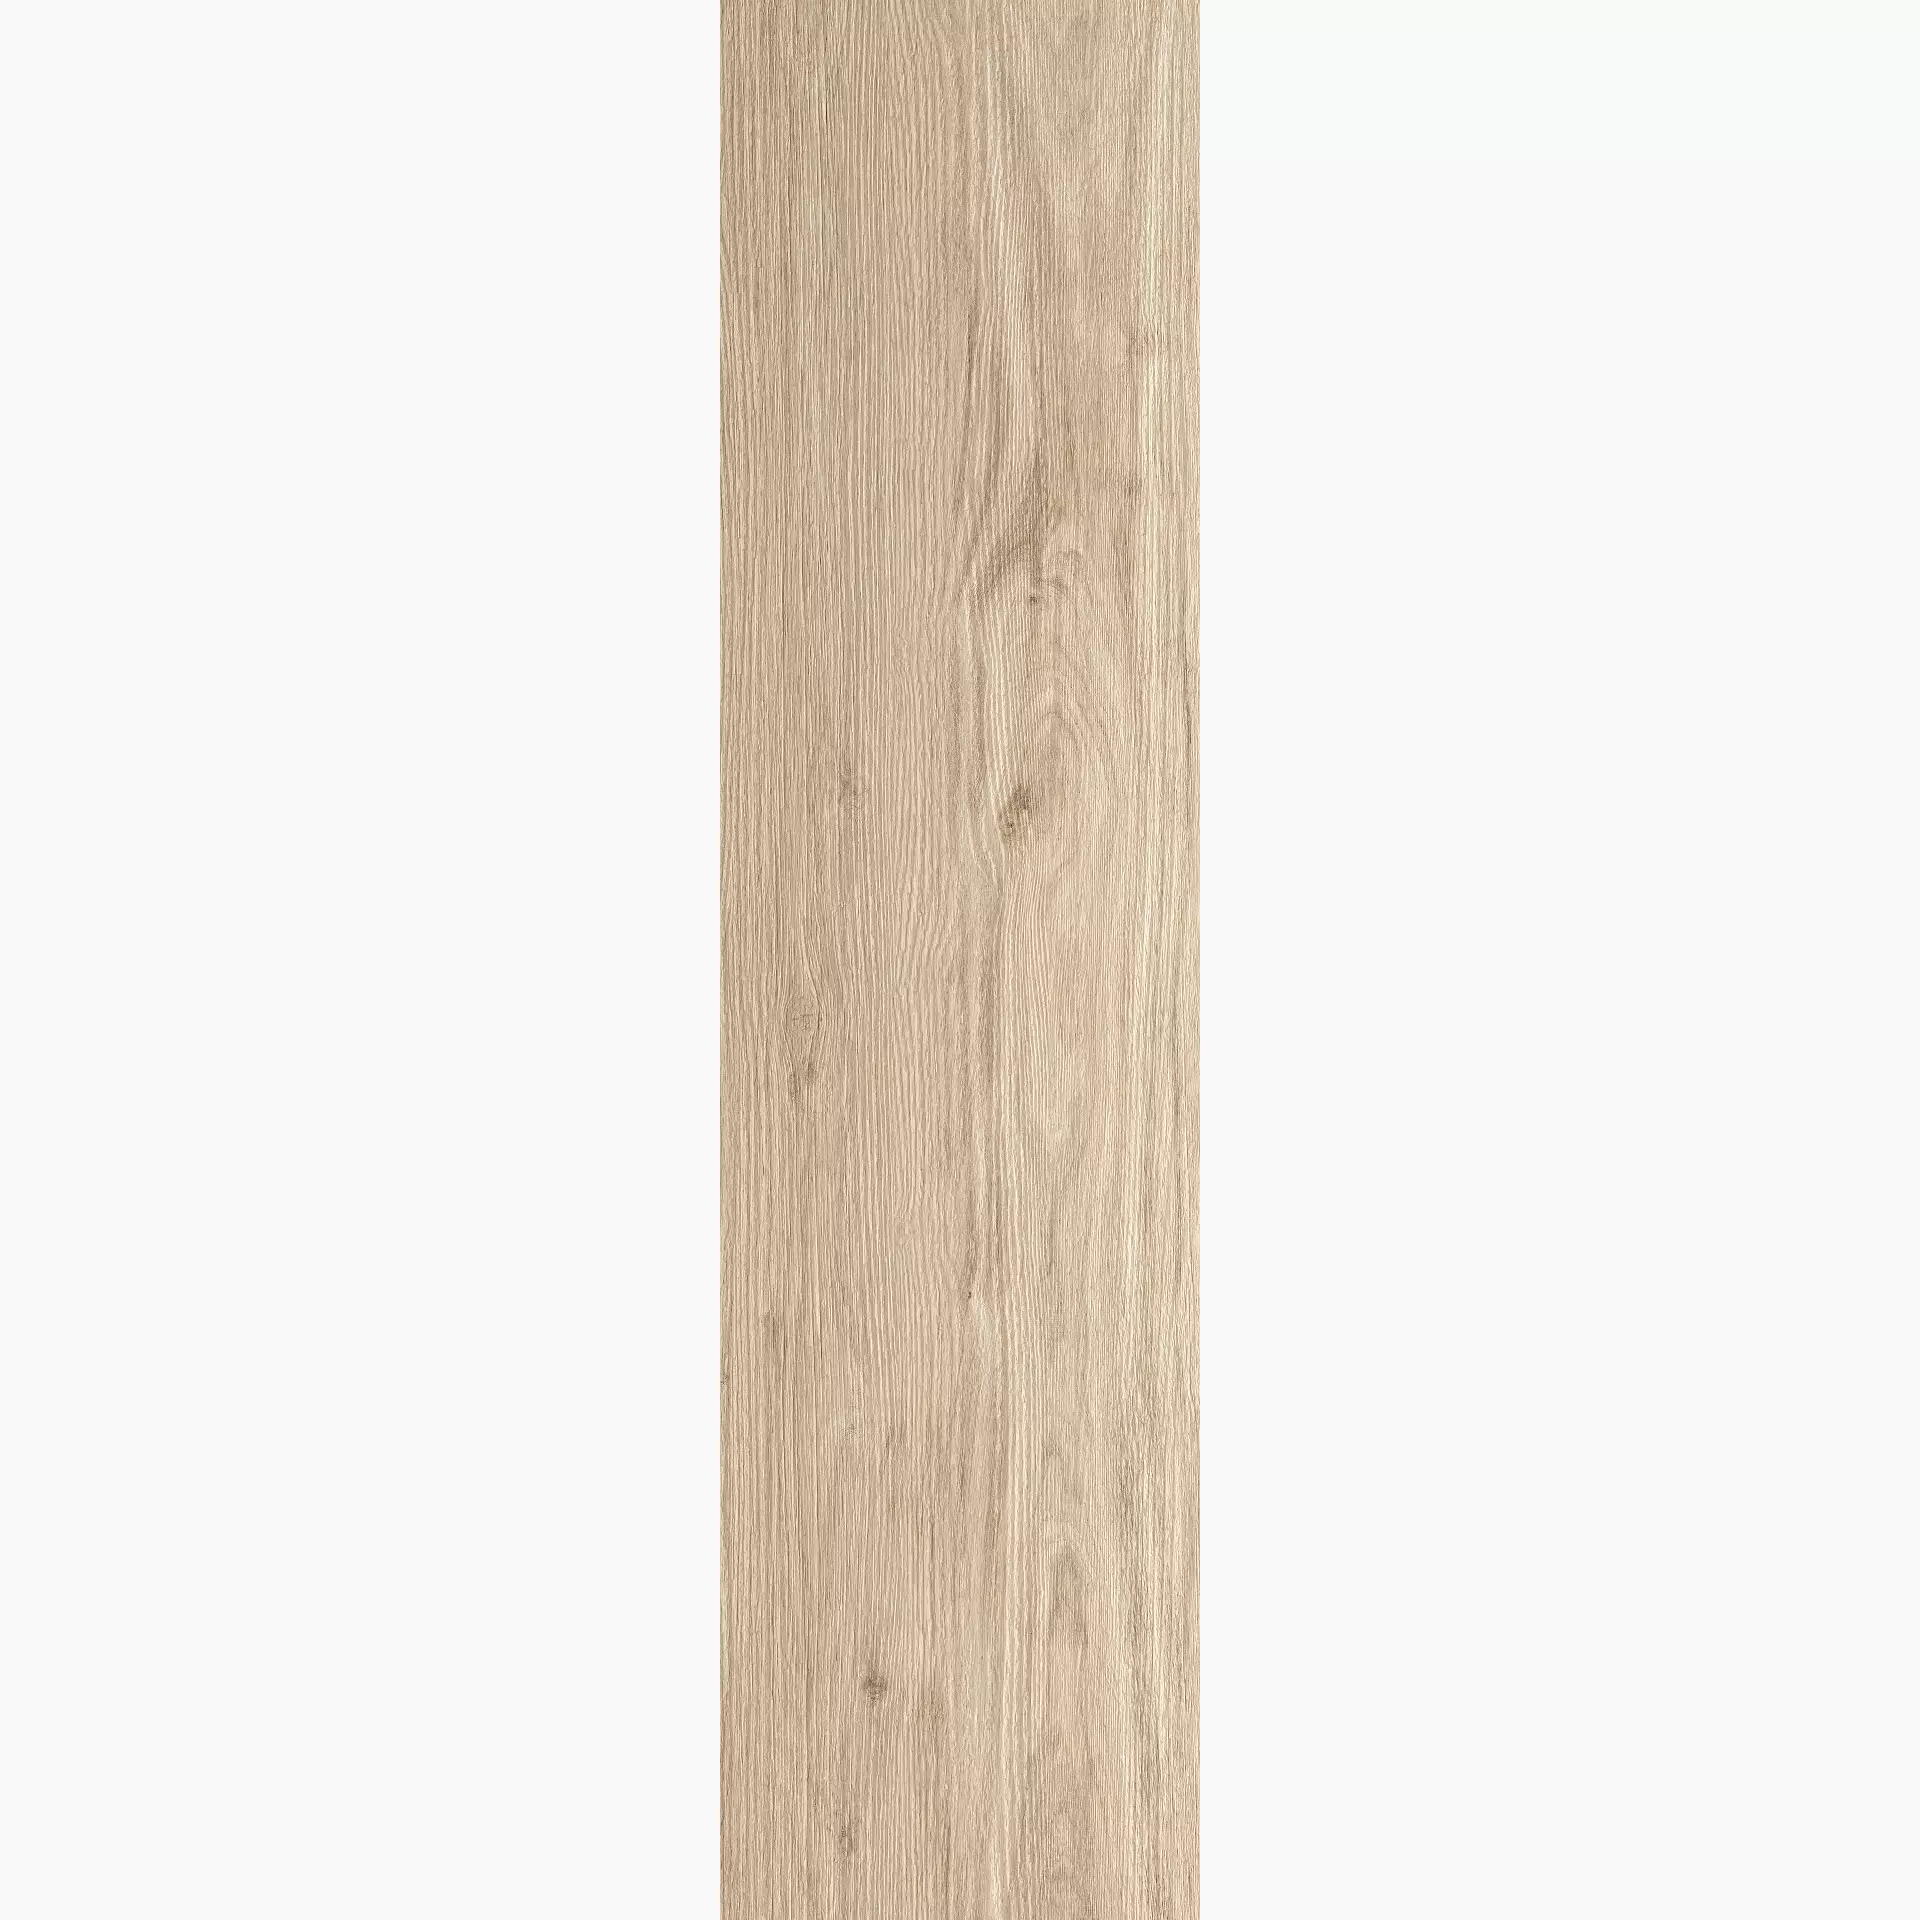 La Faenza Dama Beige Natural Slate Cut Matt Outdoor Floor 183350 30x120cm rectified 20mm - DAMA3012B ASRM